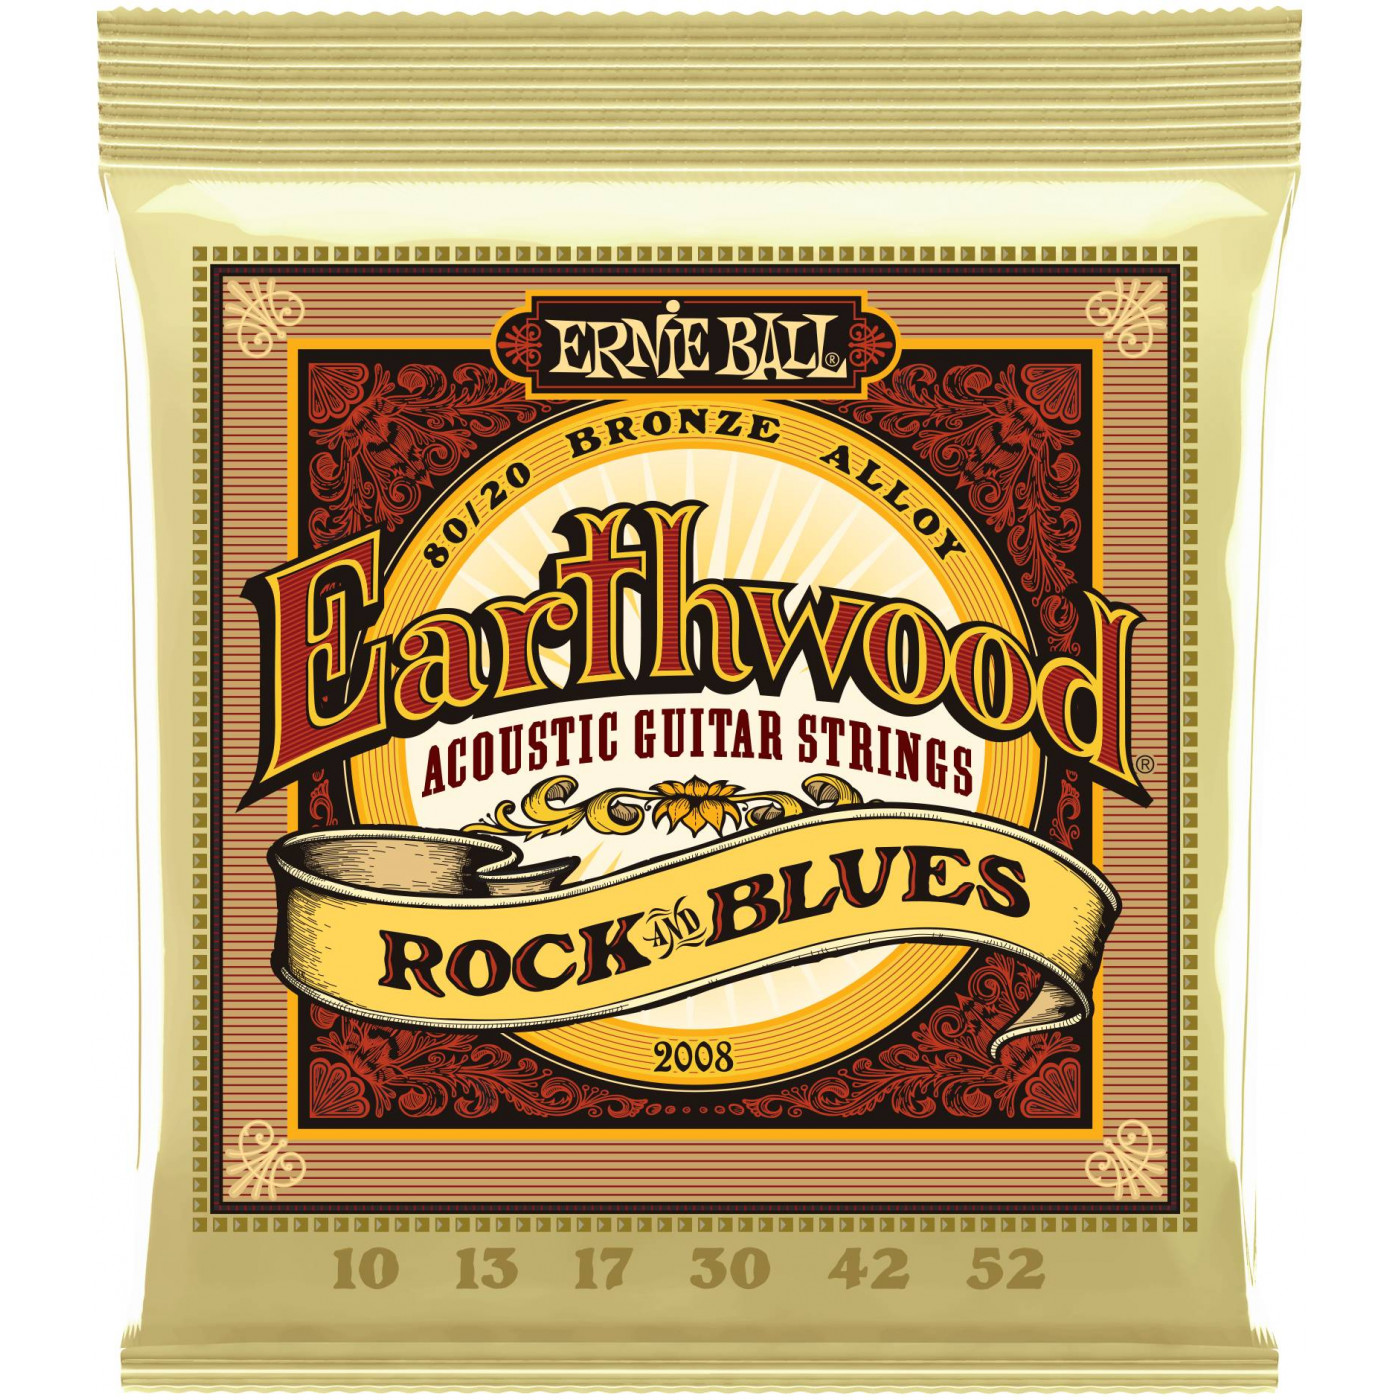 Струны Ernie Ball P02008 Earthwood Rock & Blues для акустической гитары бронза 10-52